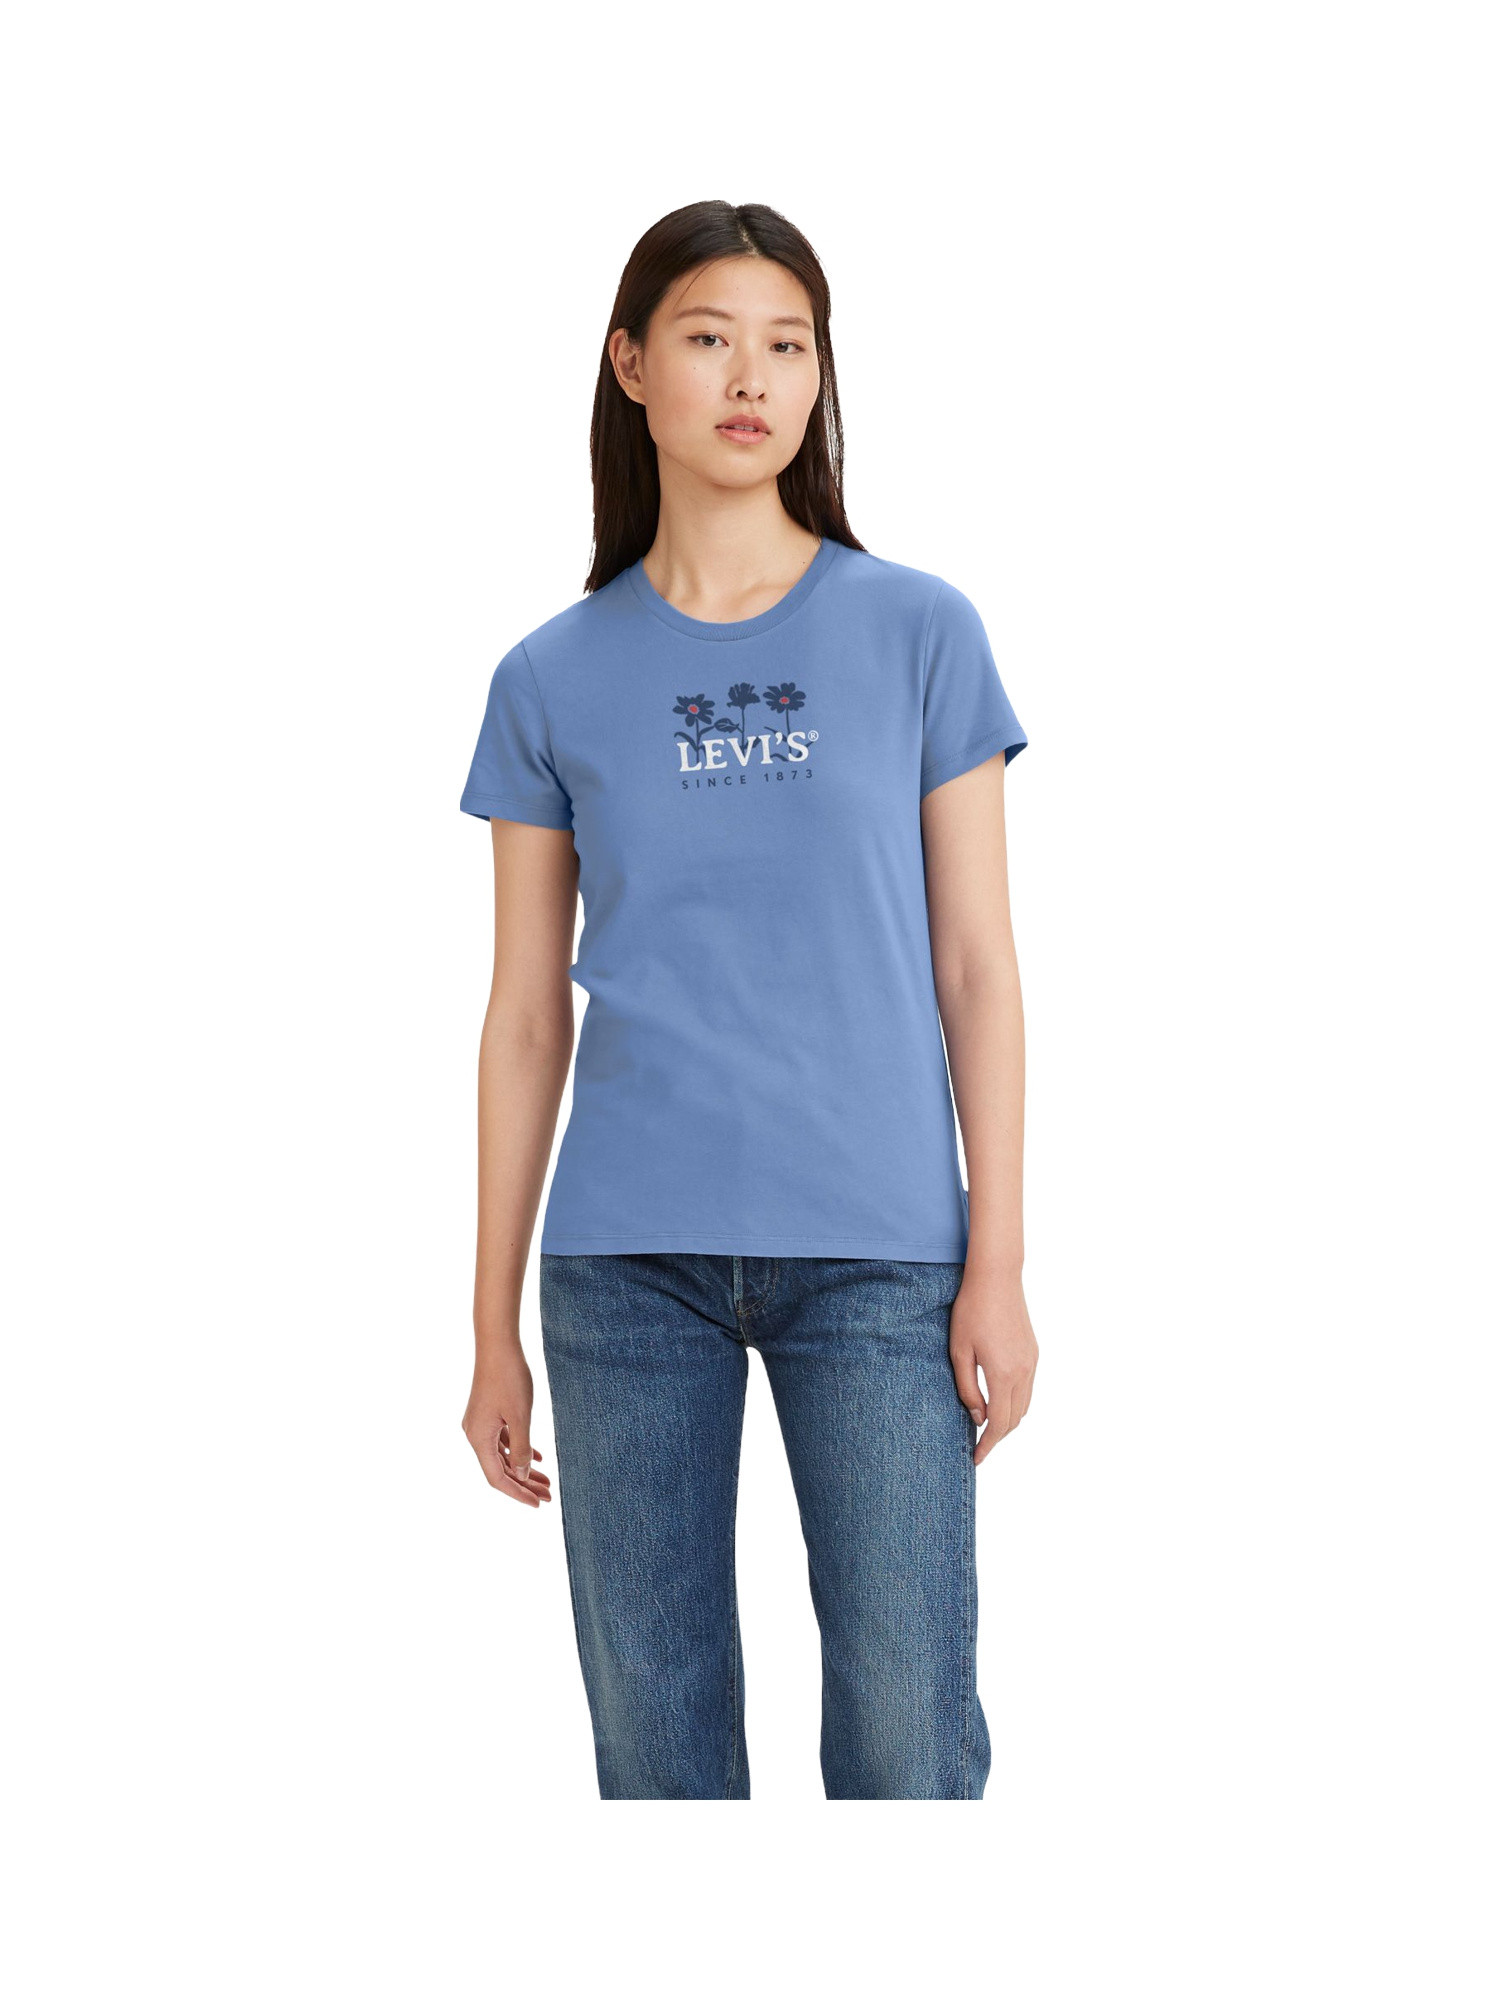 Levi's - T-shirt con logo floreale, Azzurro, large image number 2